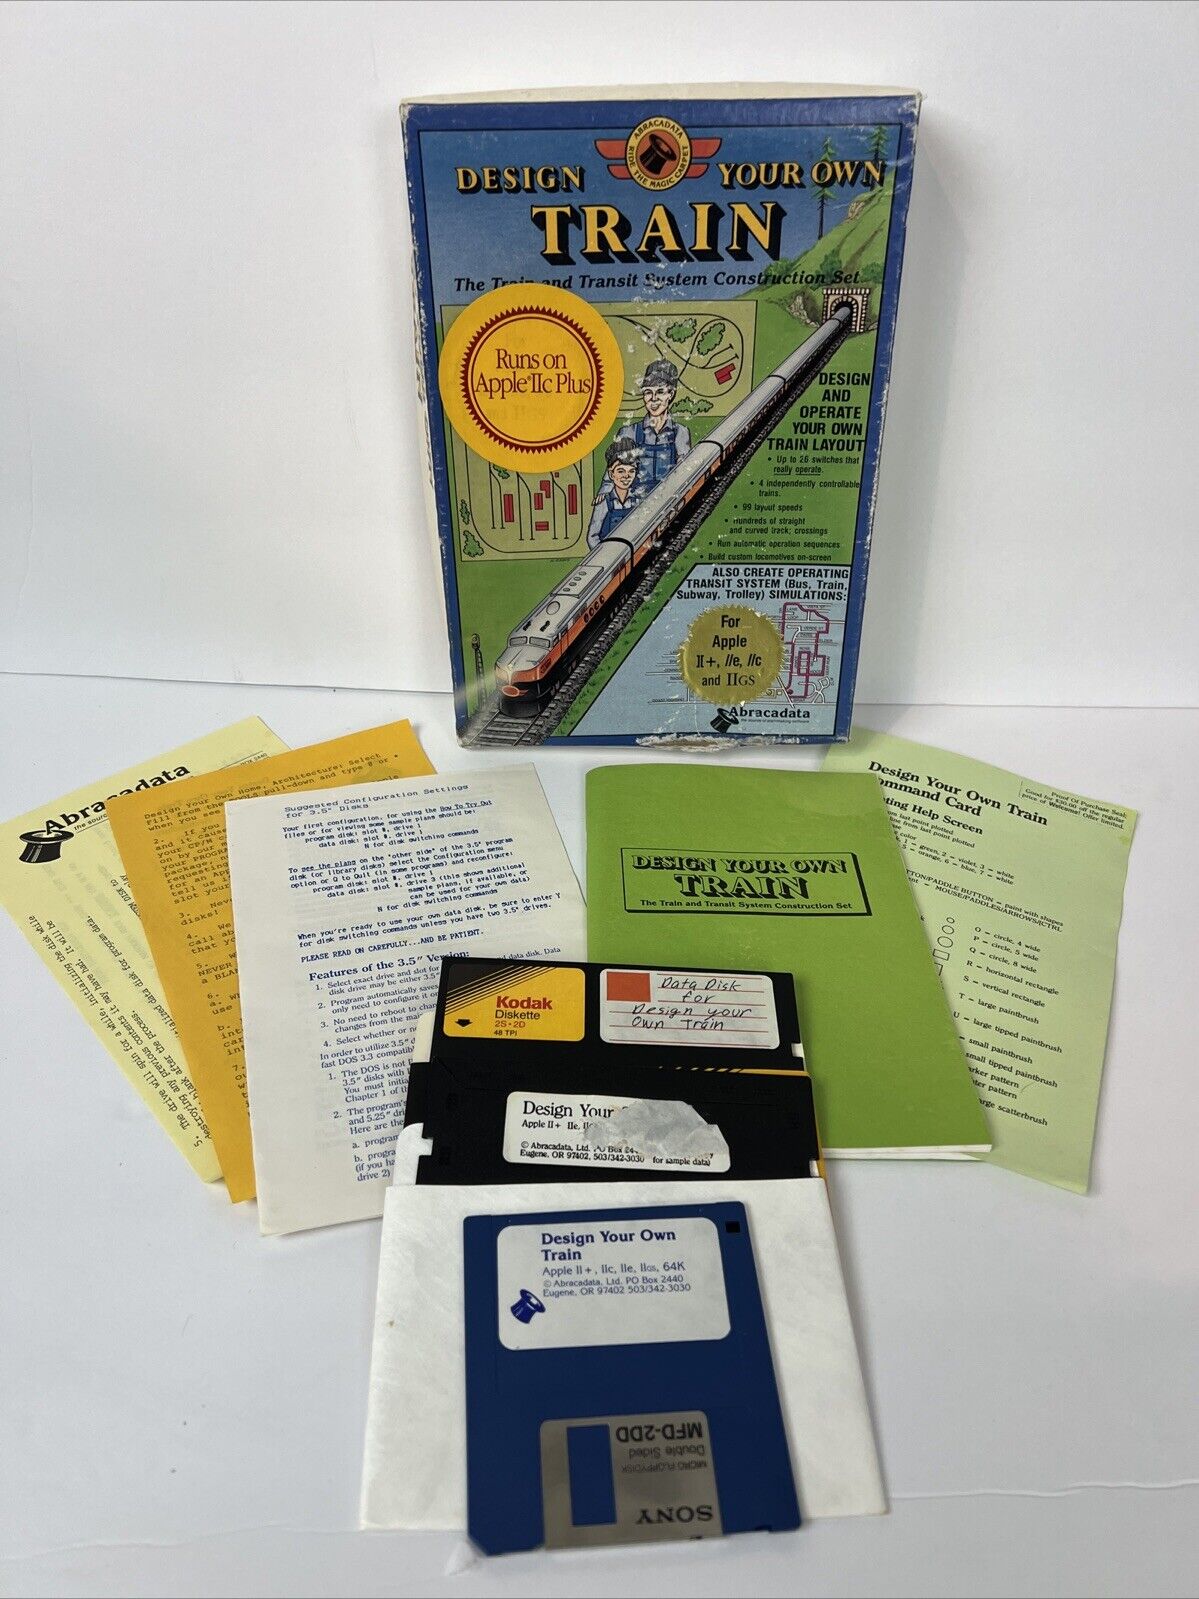 Abracadata Design Your Own Train Apple IIc Plus Vintage Computer Game